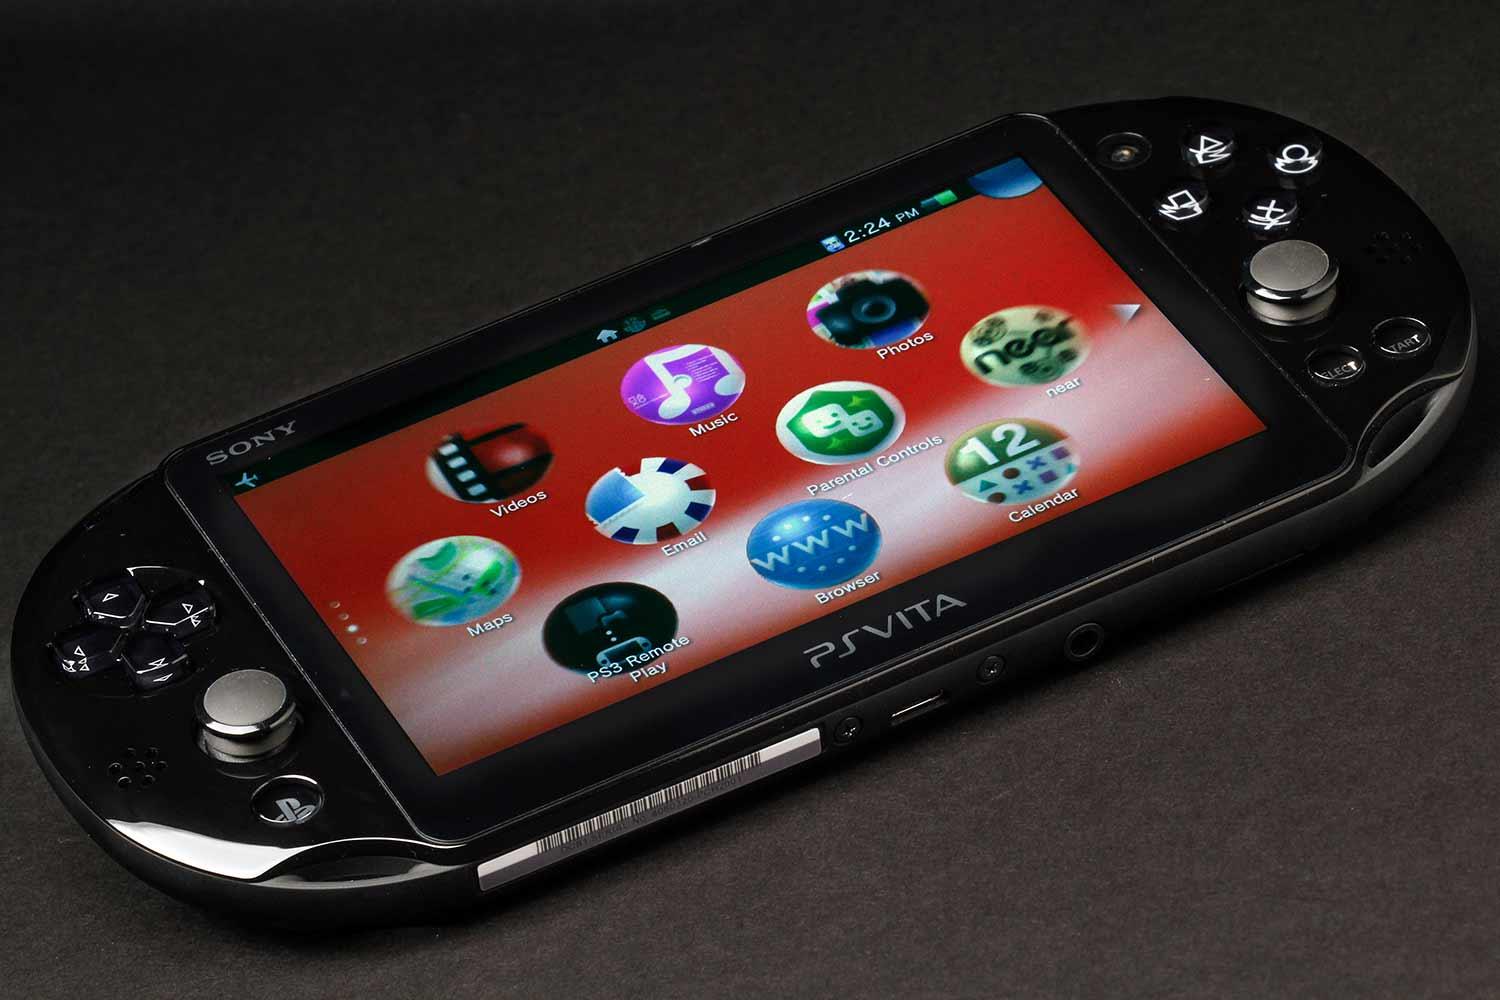 Review: Sony PlayStation Vita